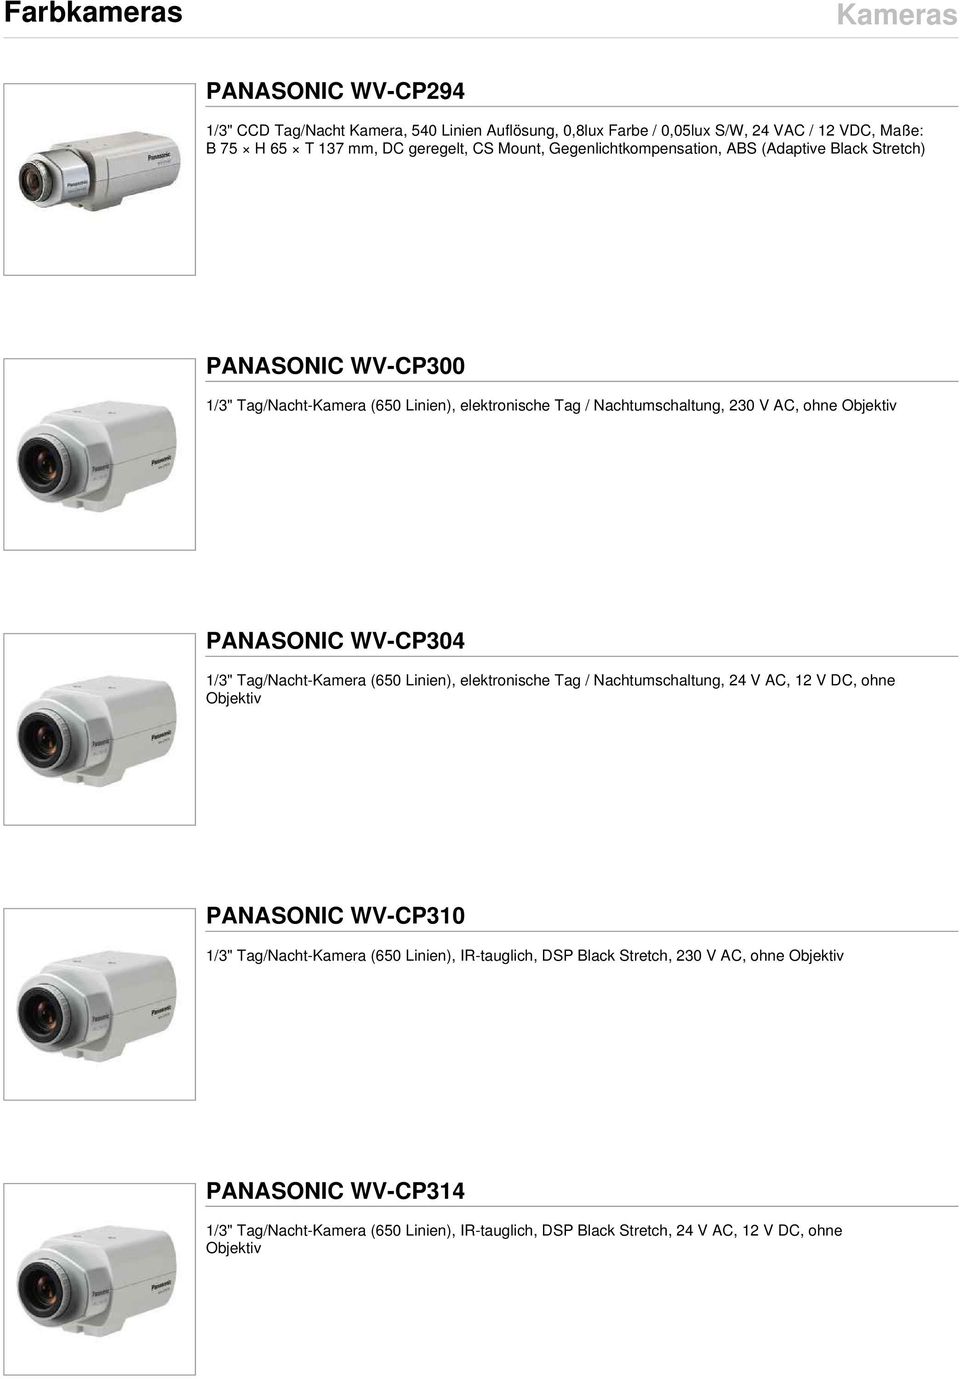 PANASONIC WV-CP304 1/3" Tag/Nacht-Kamera (650 Linien), elektronische Tag / Nachtumschaltung, 24 V AC, 12 V DC, ohne Objektiv PANASONIC WV-CP310 1/3" Tag/Nacht-Kamera (650